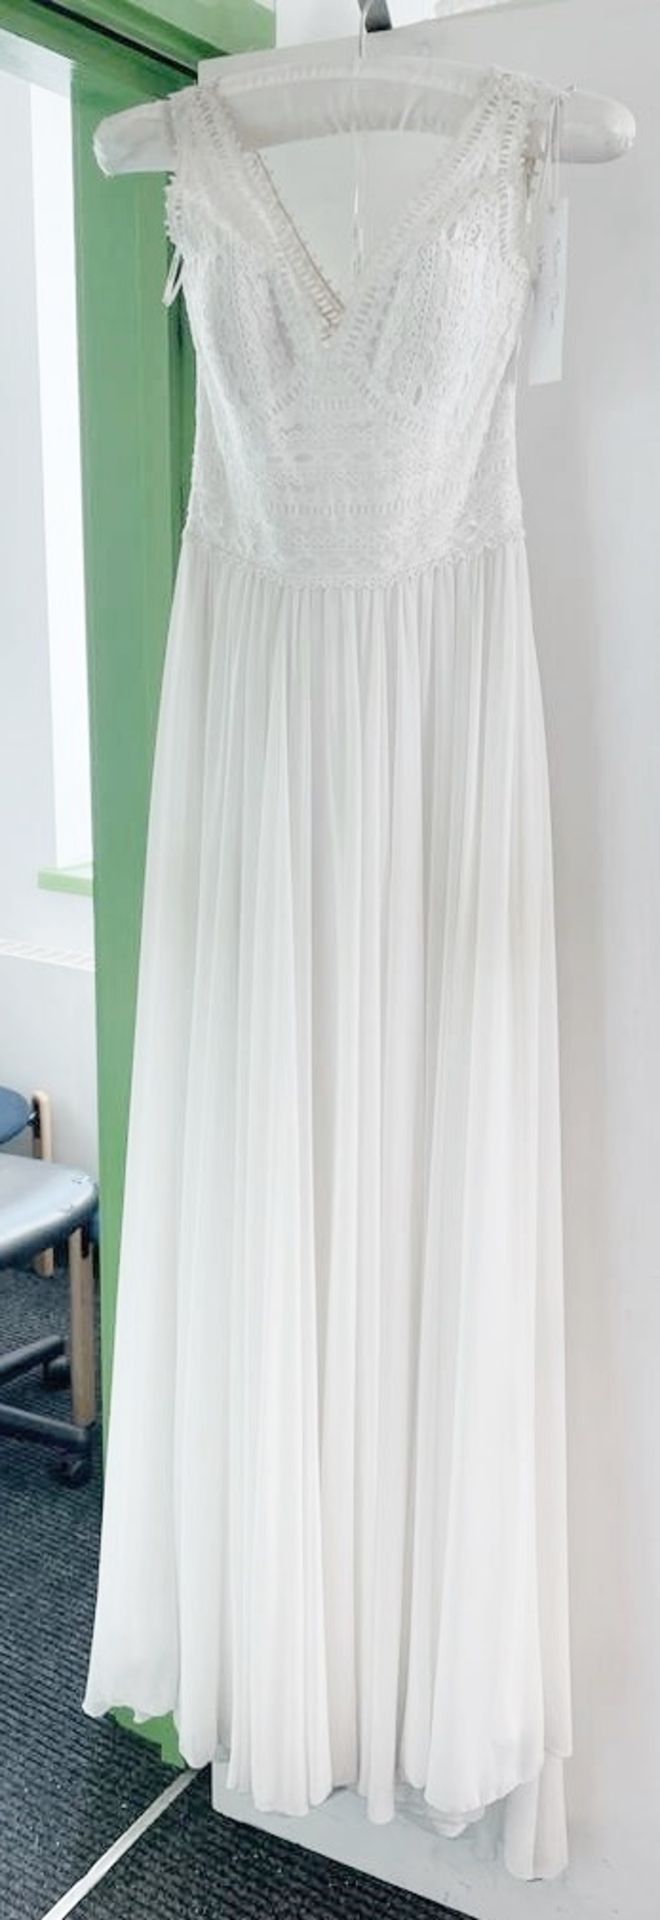 1 x PRONOVIAS 'Dramia' Designer Crocheted Lace Wedding Dress Bridal Gown, With Chiffon Gathered - Image 5 of 20